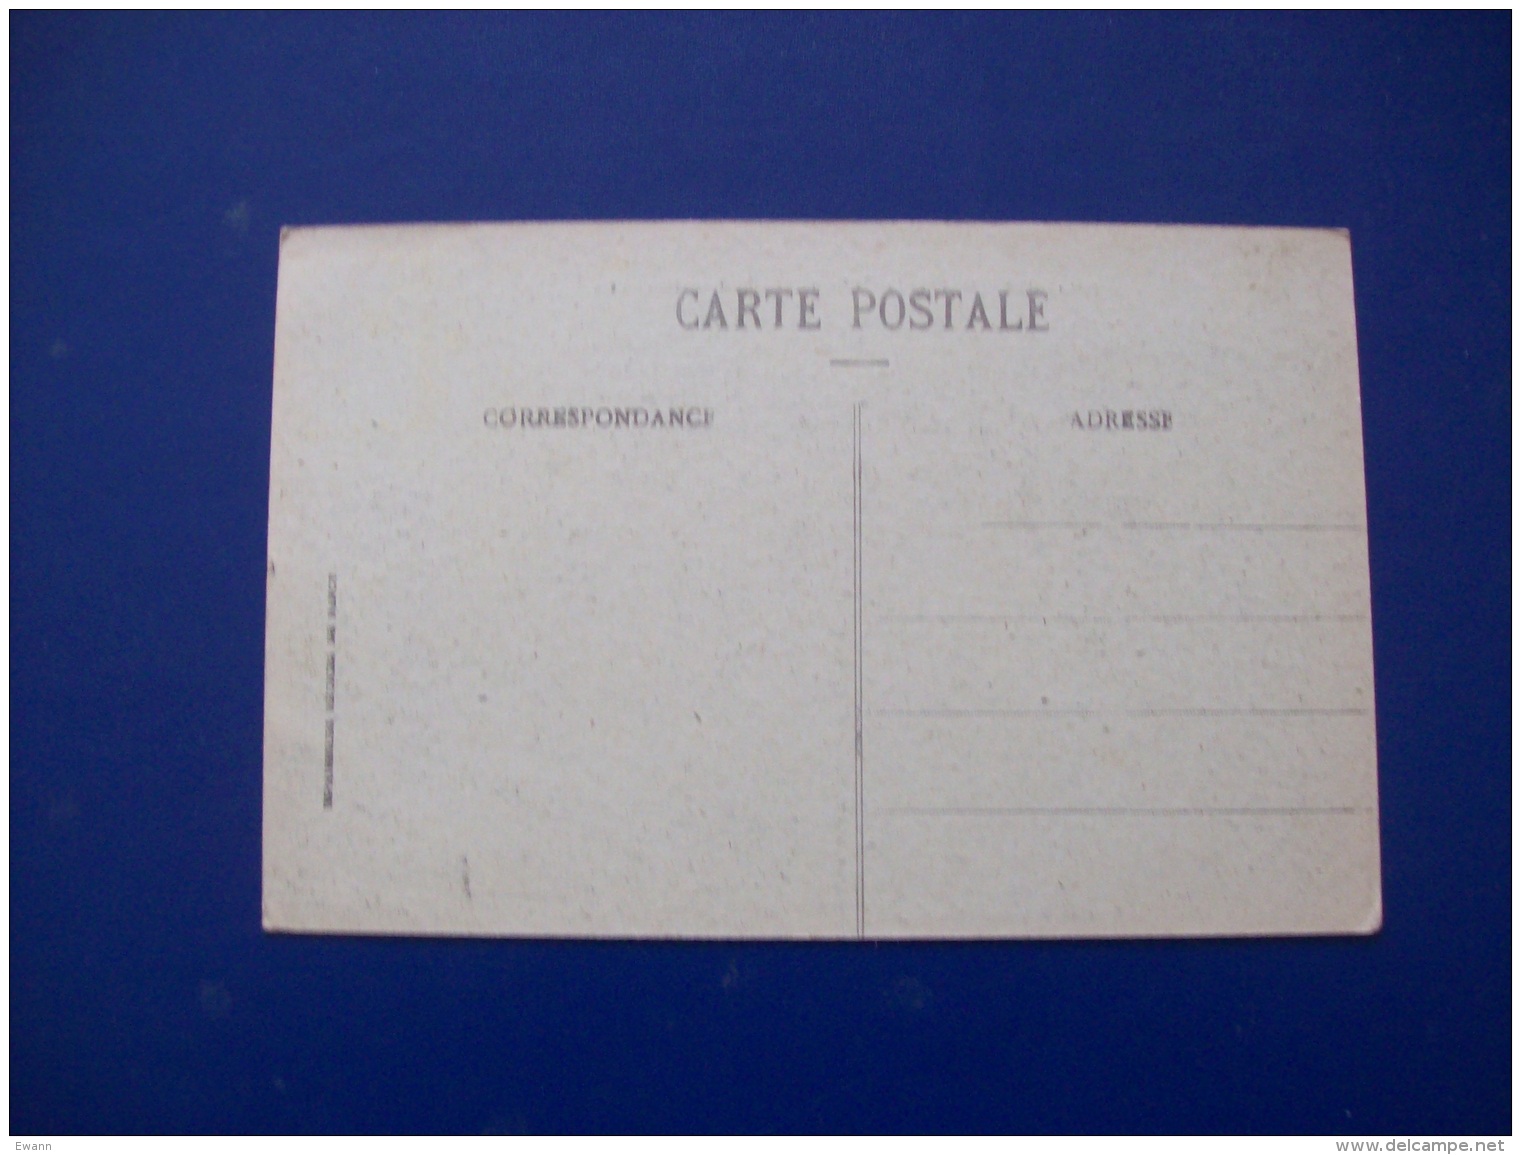 Carte Postale Ancienne De Pont-Scorff: La Vallée Du Scorff- Brasserie St-Yves - Pont Scorff